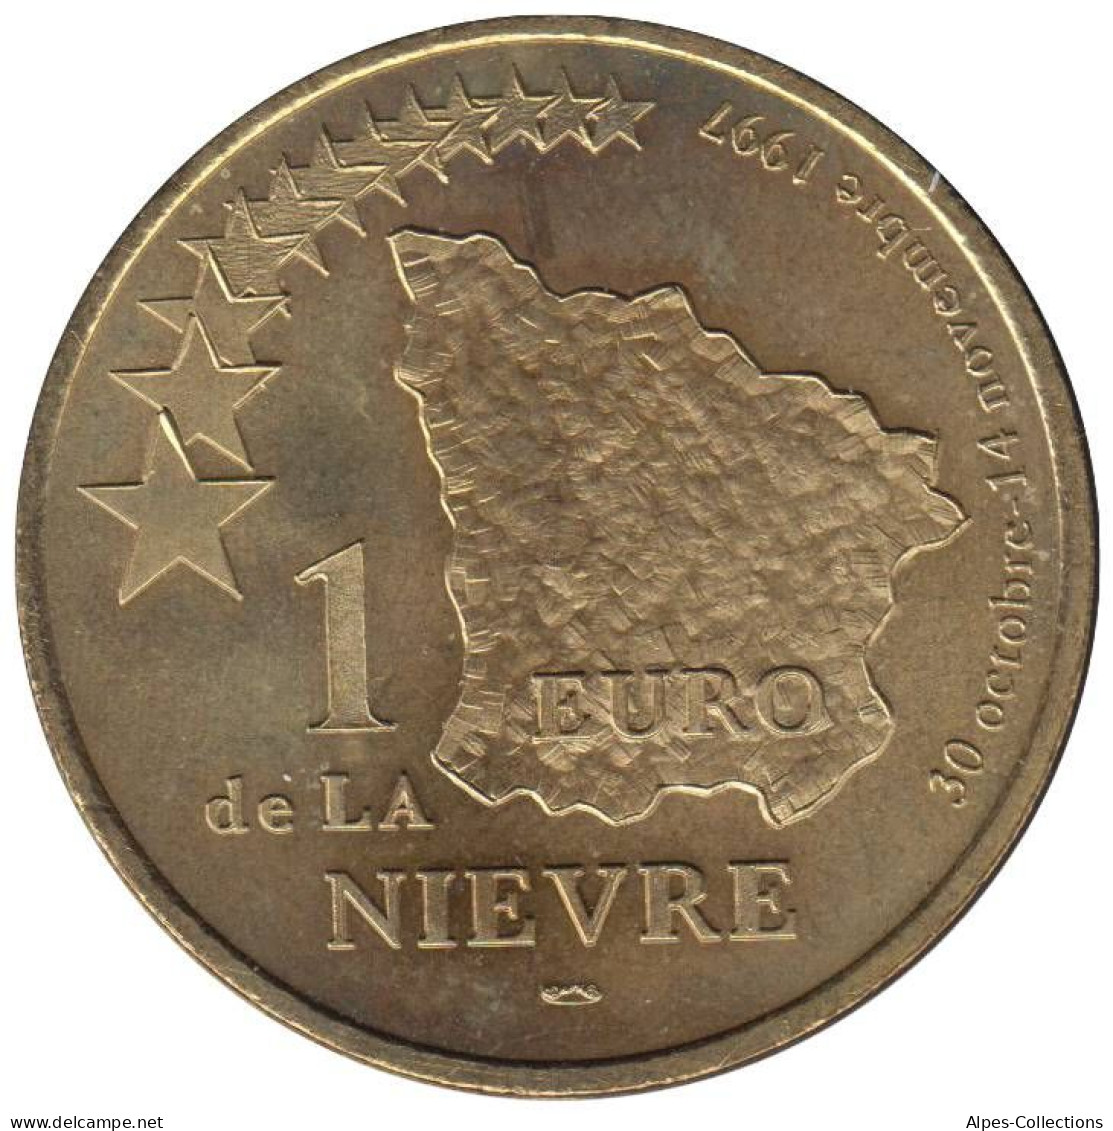 NIEVRE - EU0010.3 - 1 EURO DES VILLES - Réf: T341 - 1997 - Euros De Las Ciudades